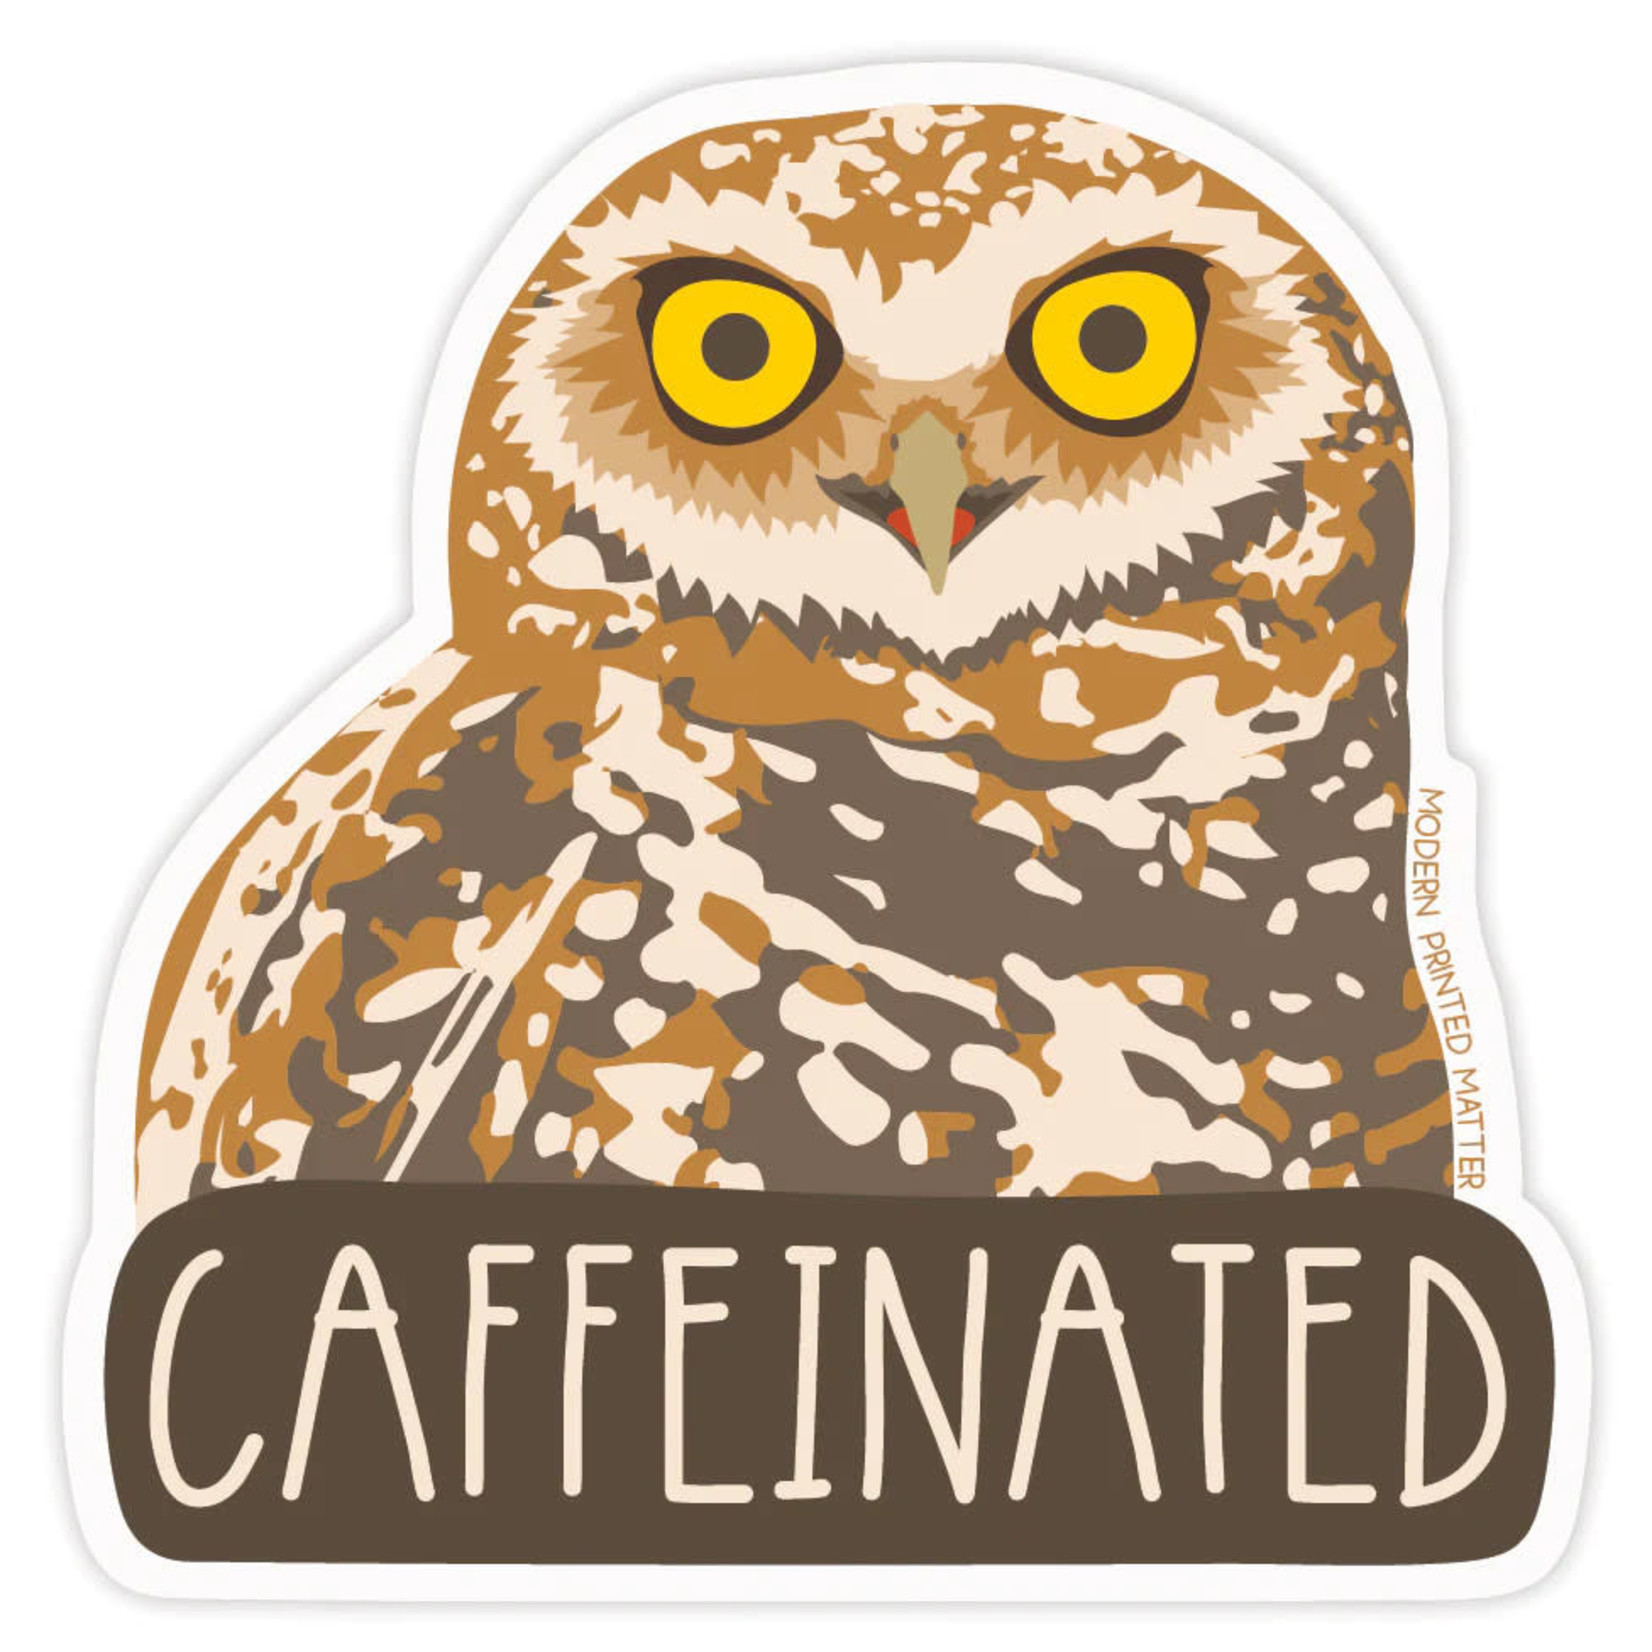 Modern Printed Matter Caffeinated Sticker